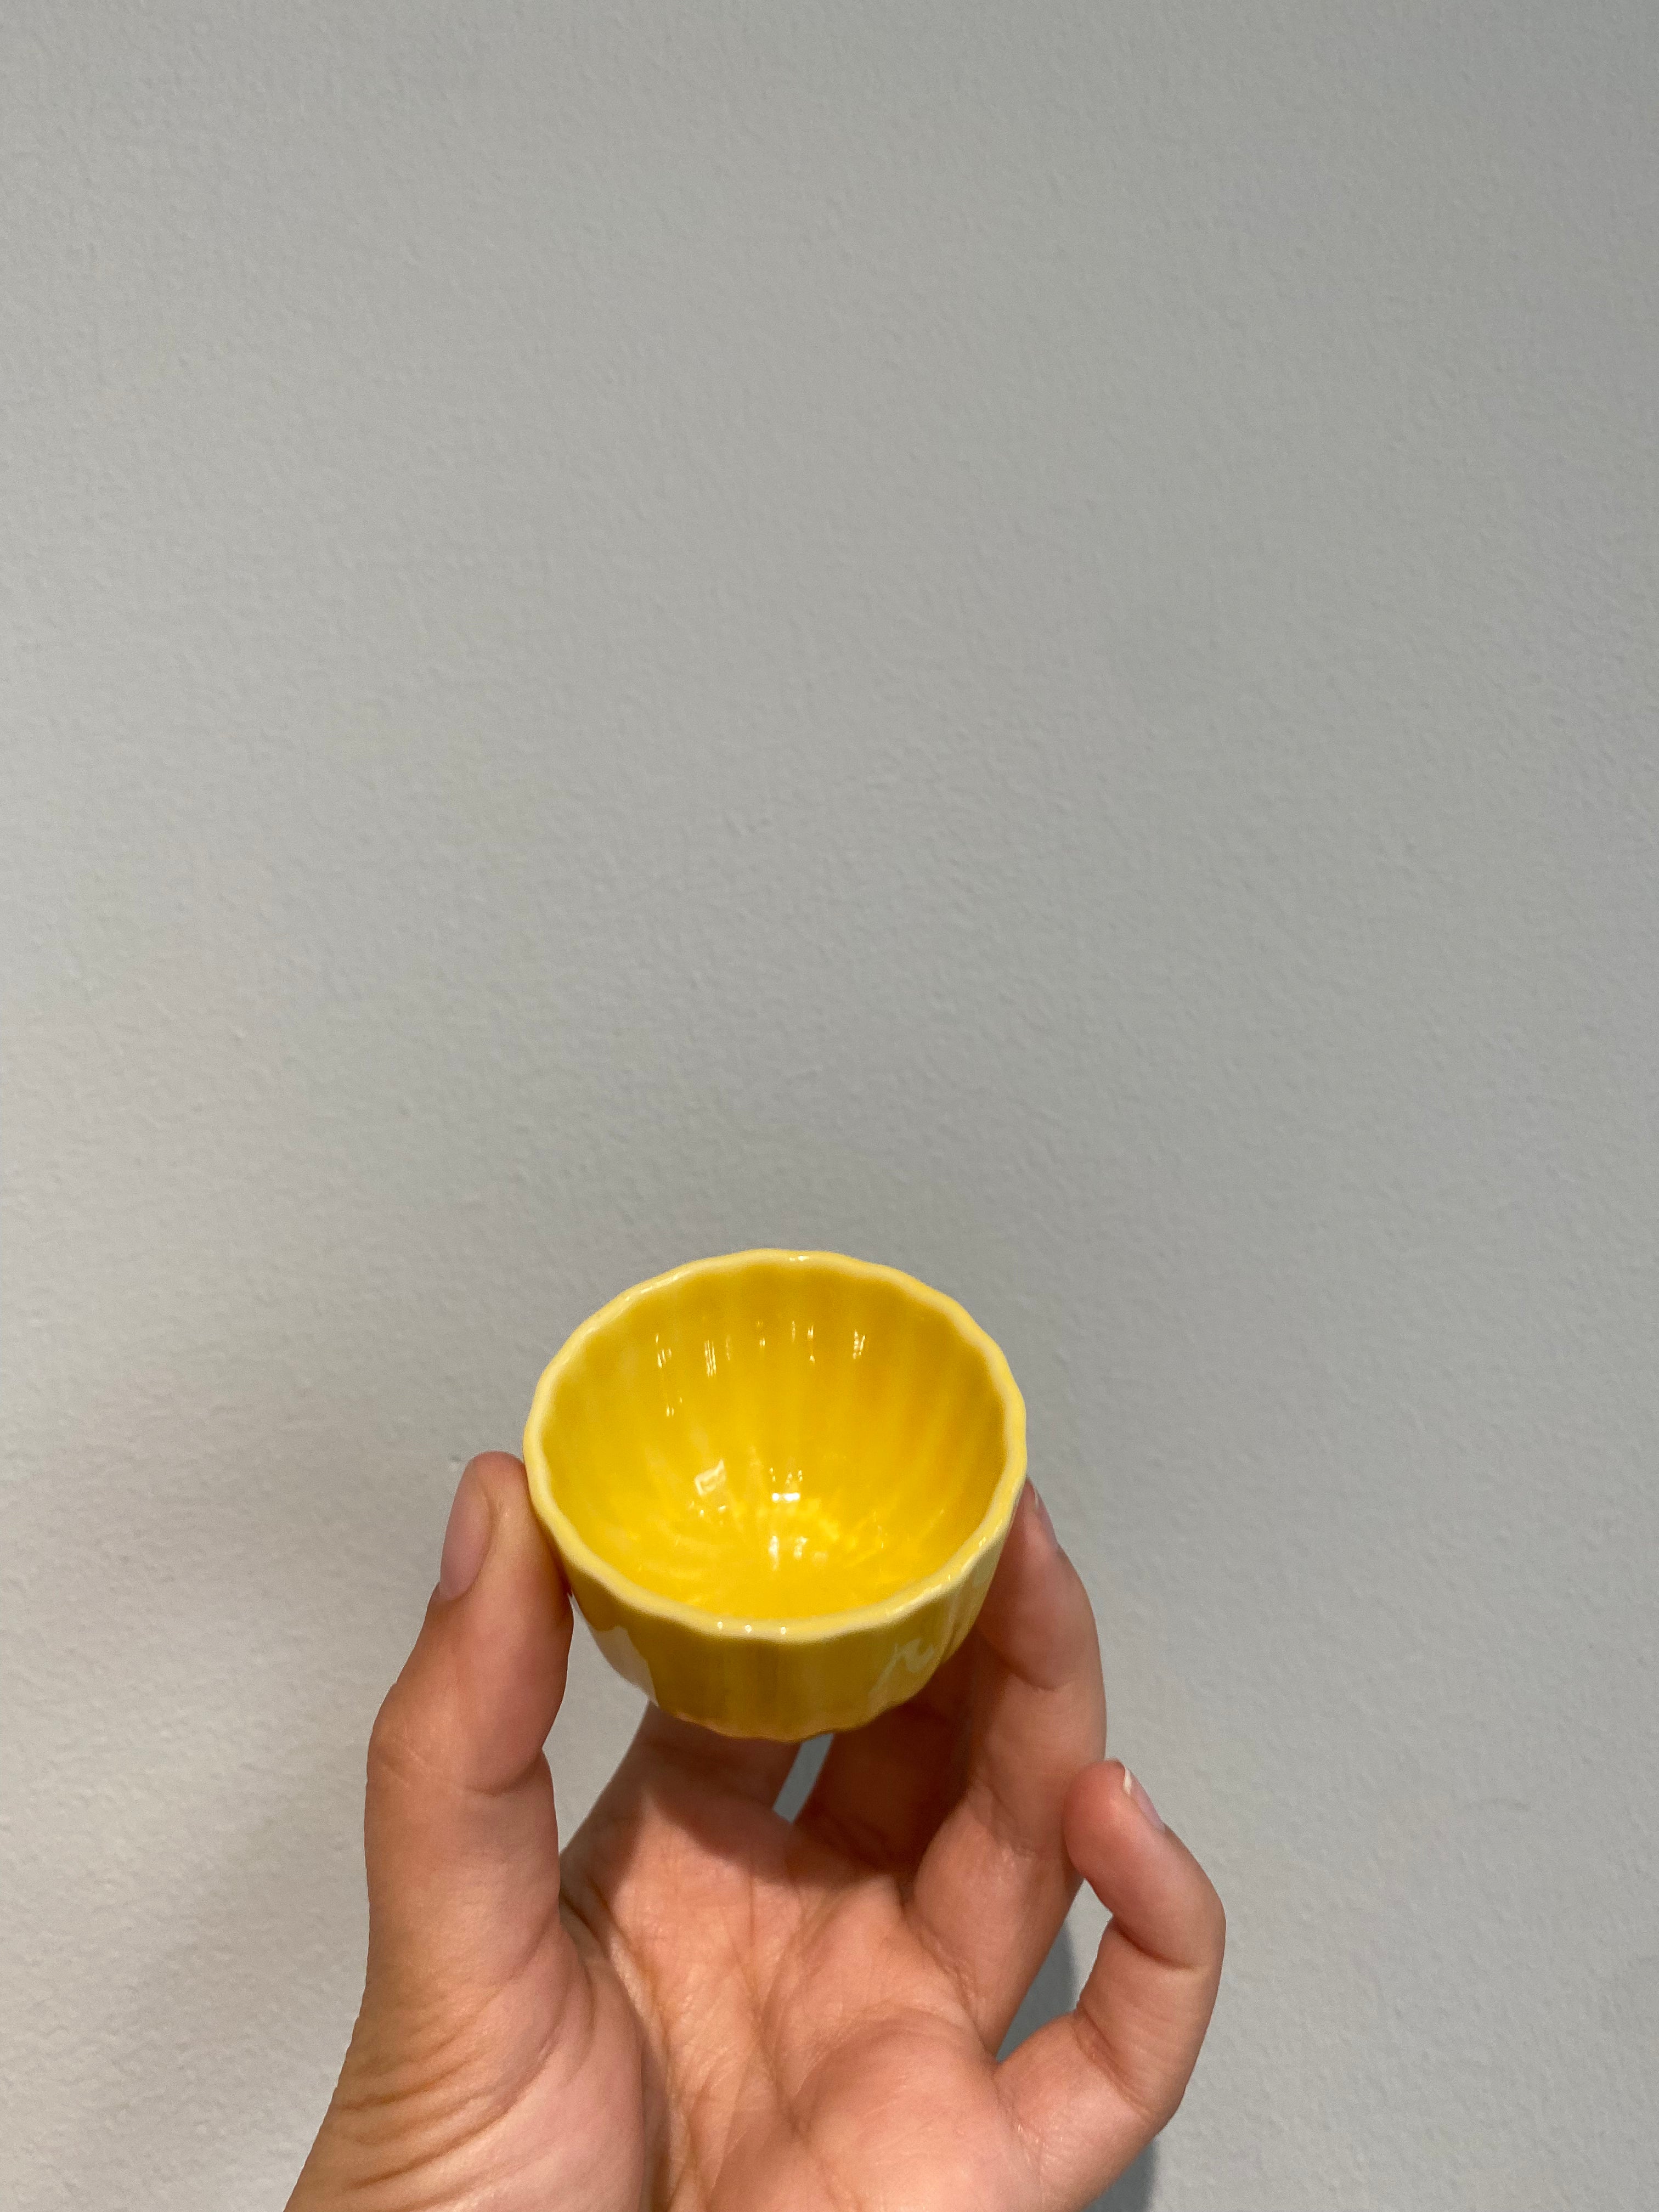 Flower-shaped egg cups